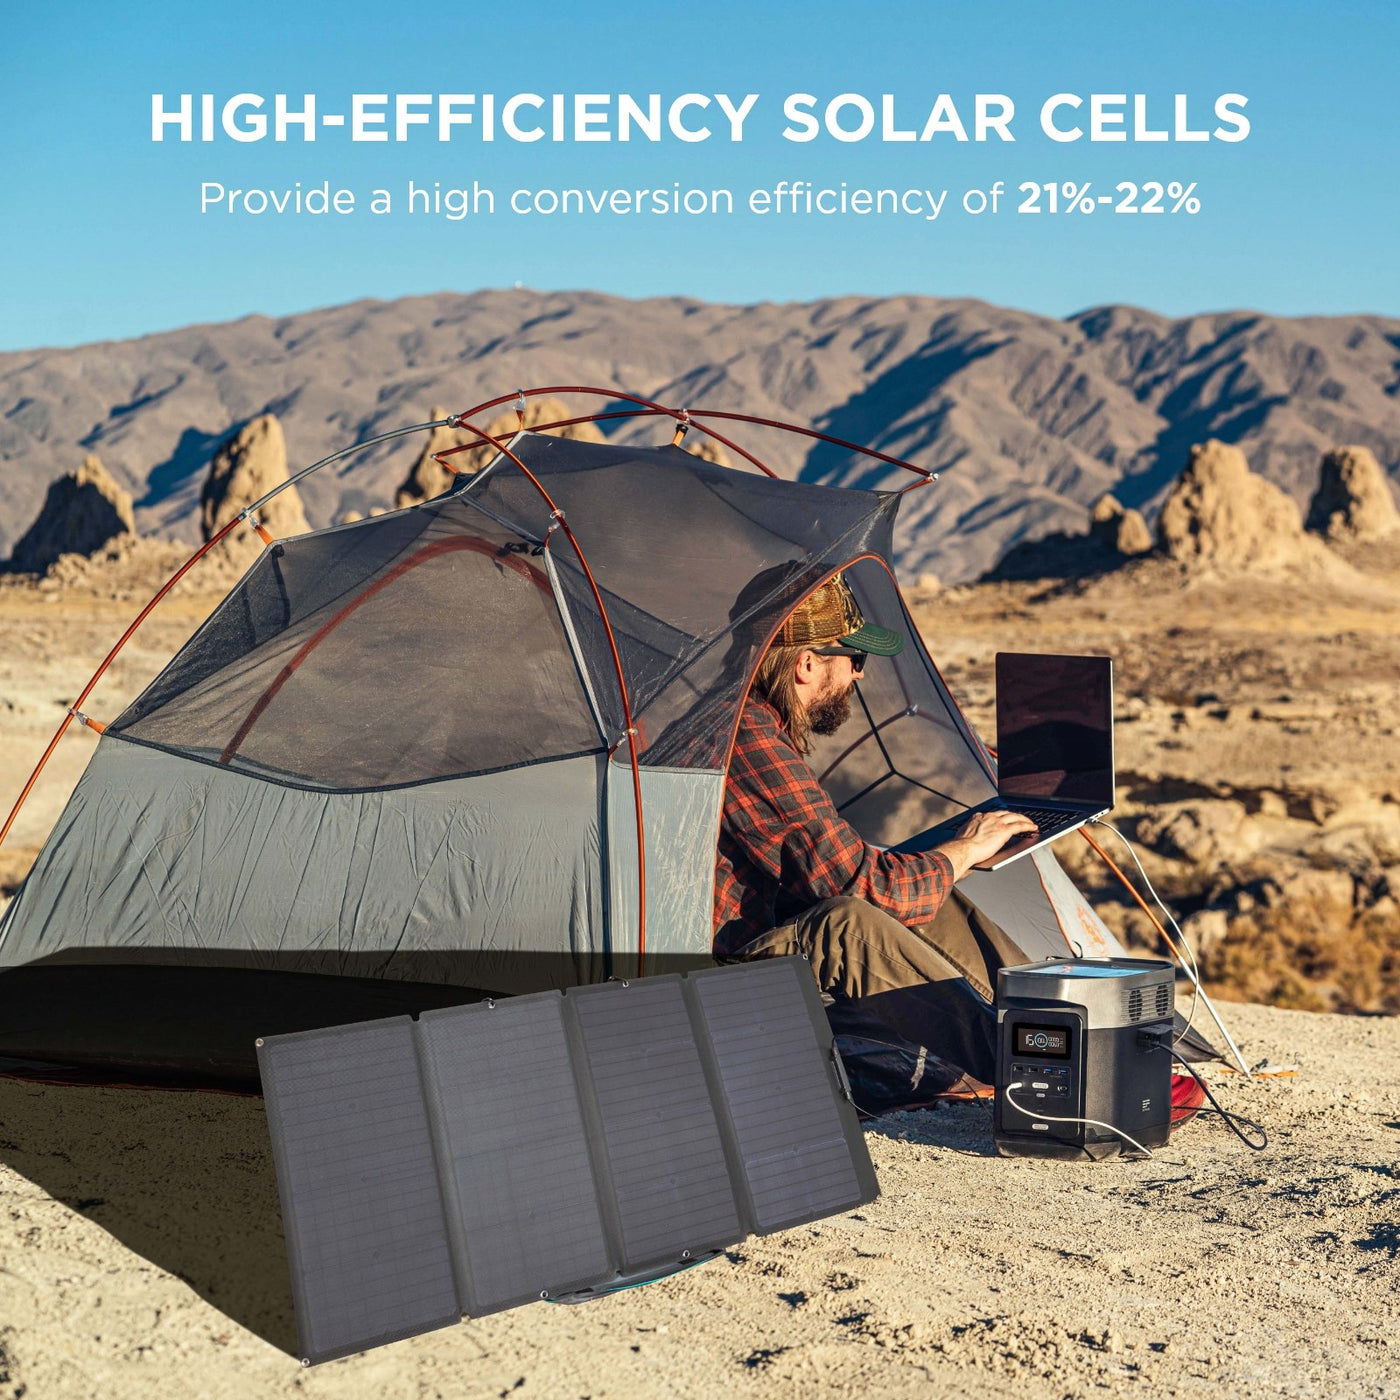 Ecoflow 160W Solarpanel Produktnutzen